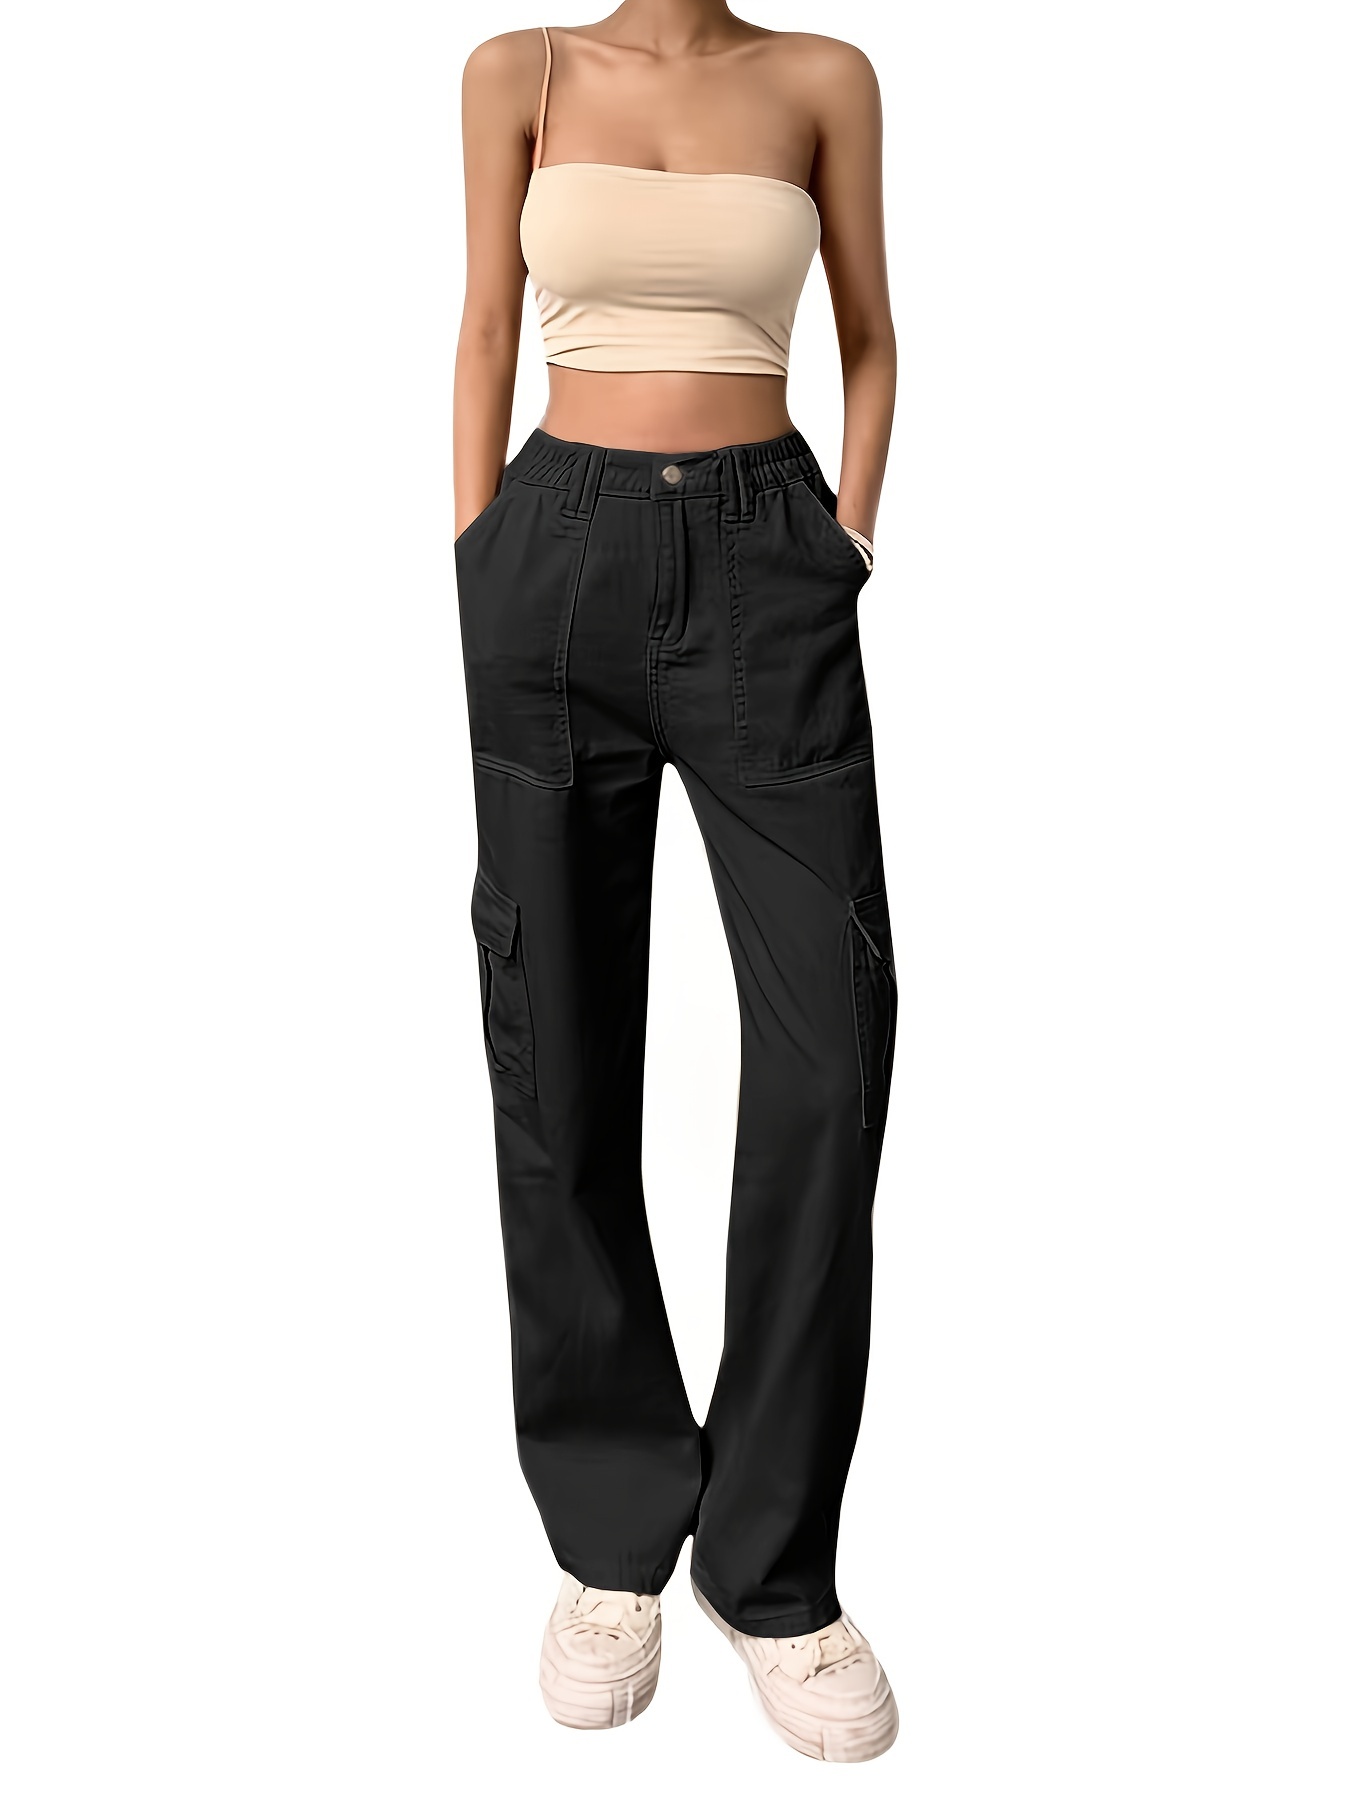 Black Y2K Vintage Style Cargo Pants, Baggy Jeans Women Fashion